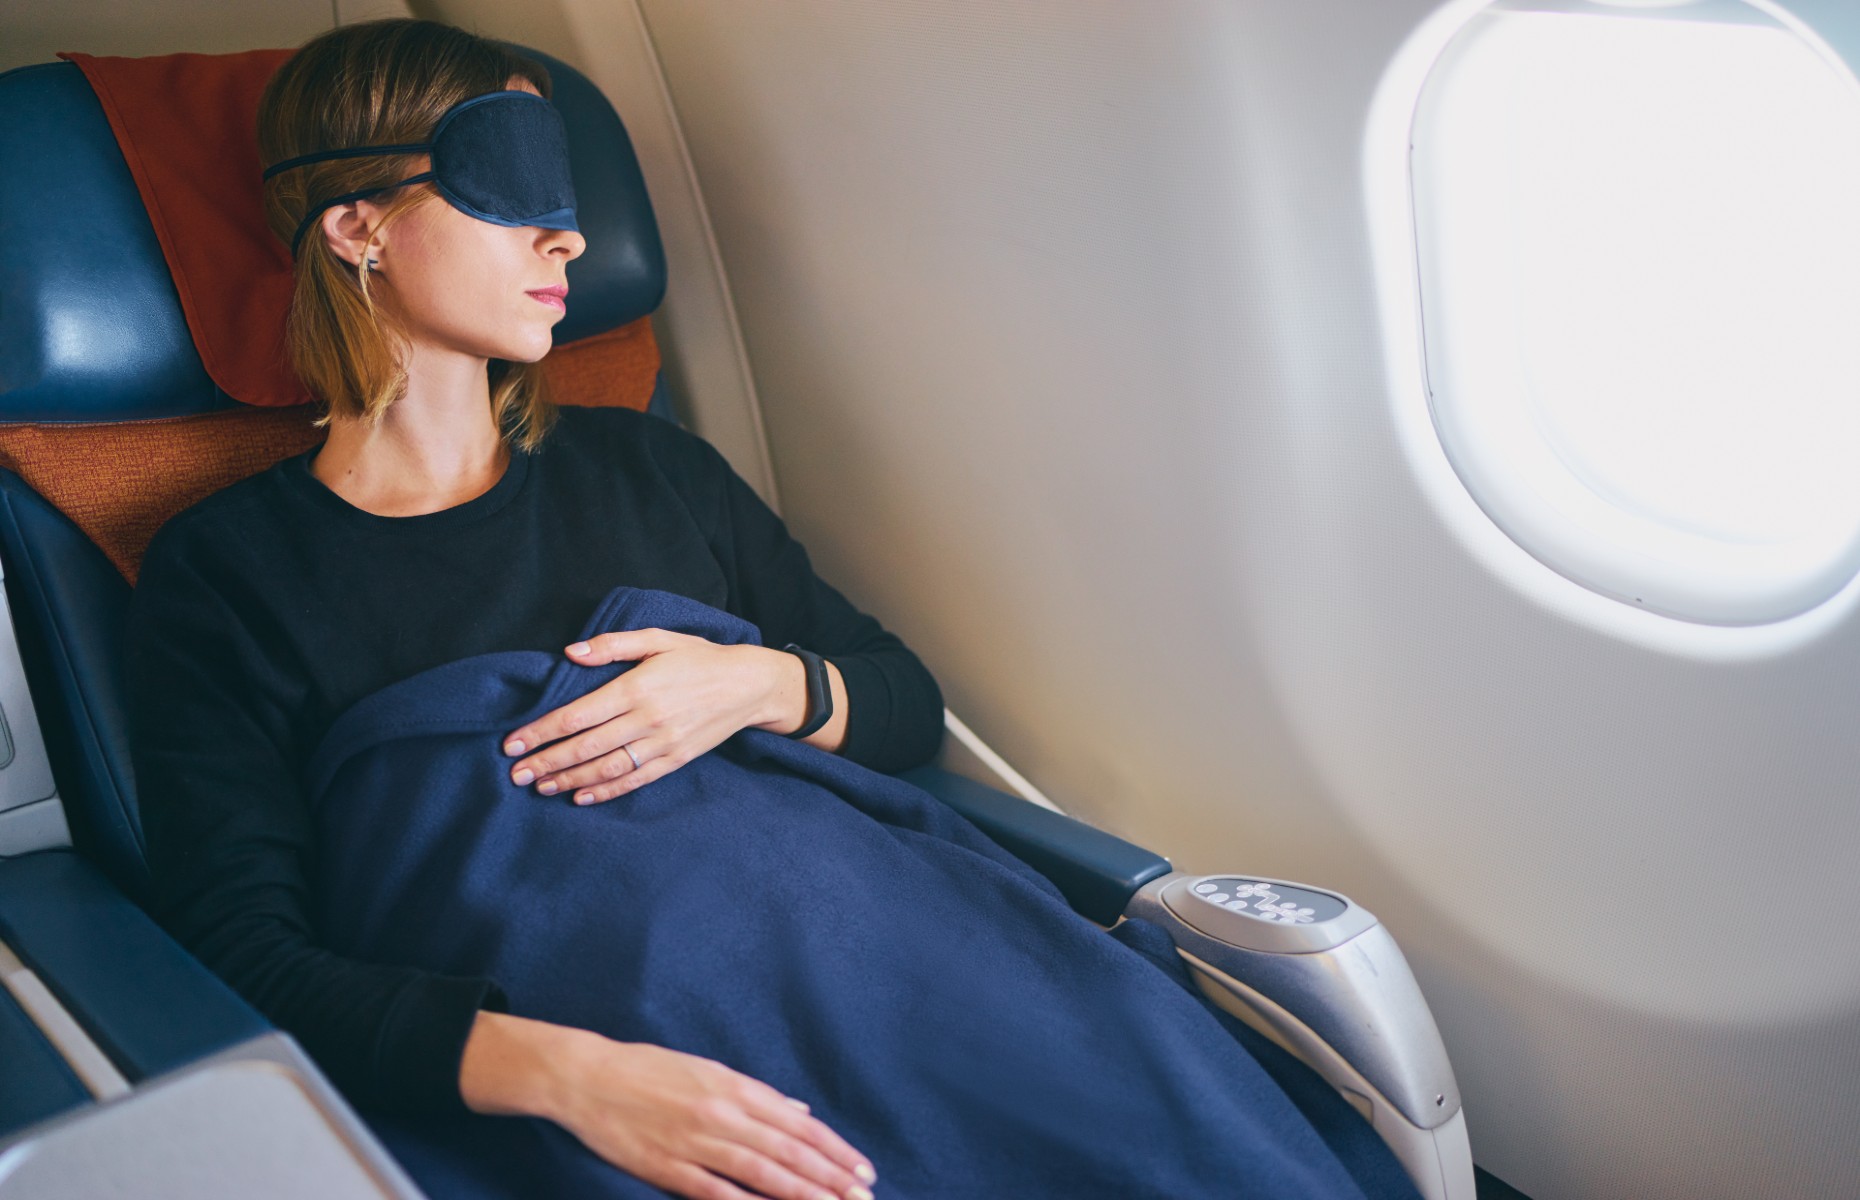 Passenger sleeping on a plane (Image: kudla/Shutterstock)